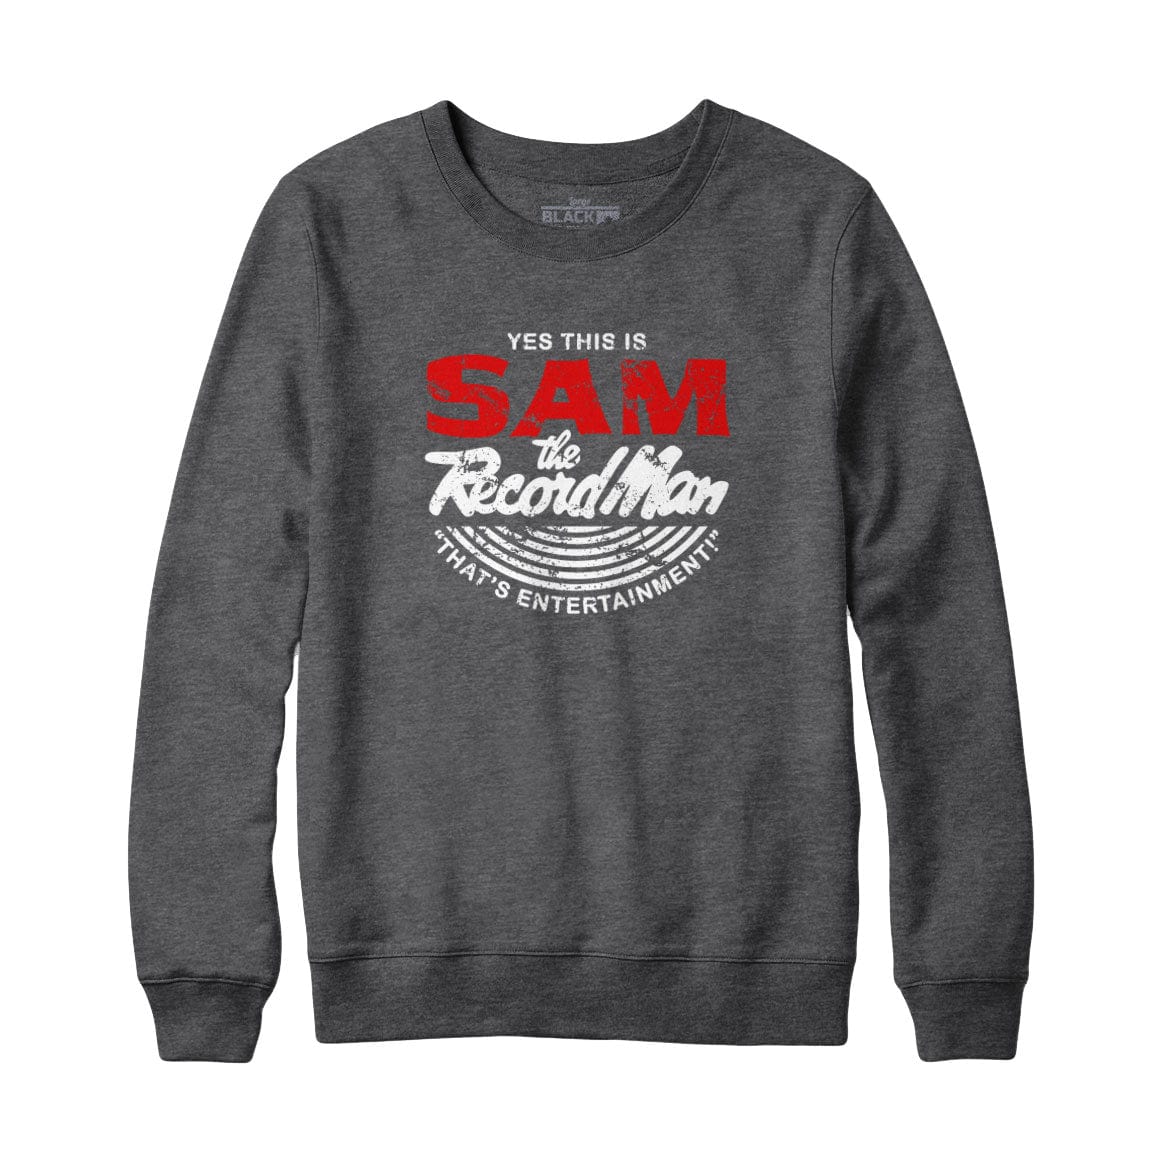 Sam the Record Man Sweatshirt Hoodie